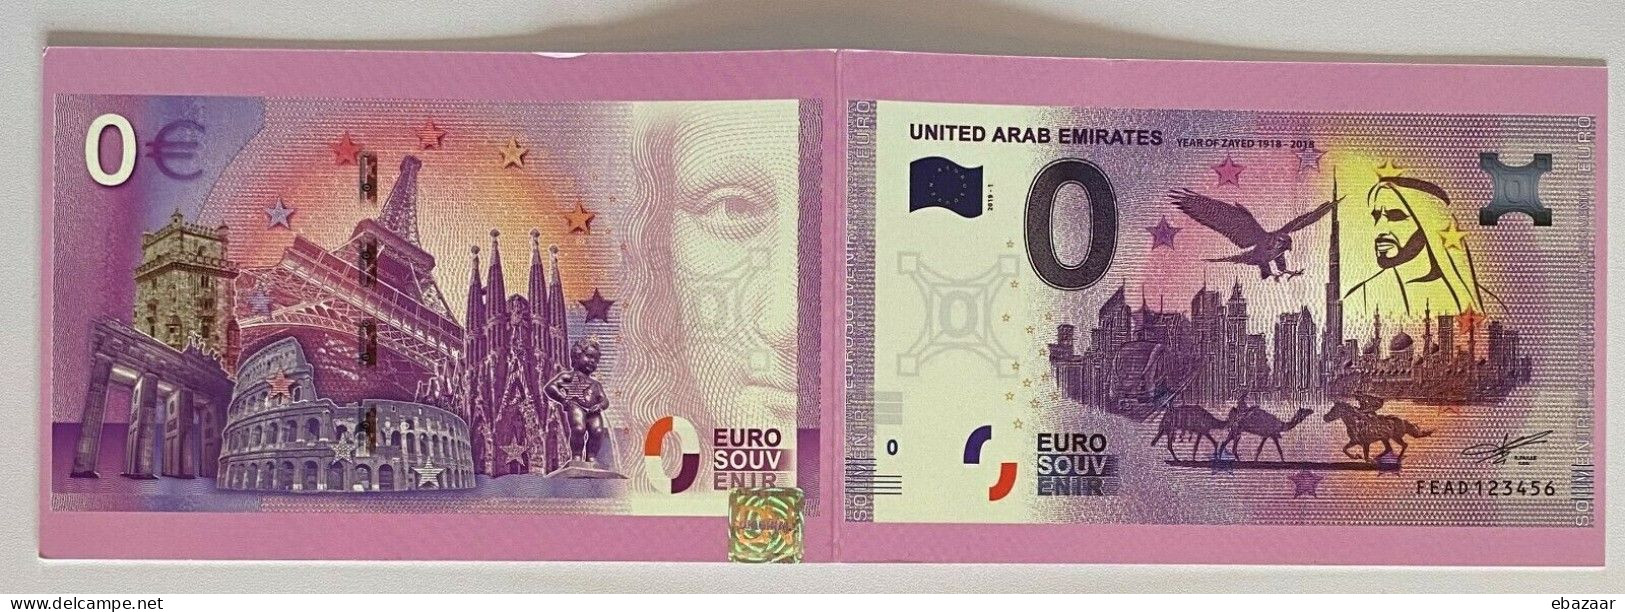 United Arab Emirates 2019 UAE Zero Euro Banknotes 0 Euro Year Of Zayed + Vignette In Folder UNC - Essais Privés / Non-officiels